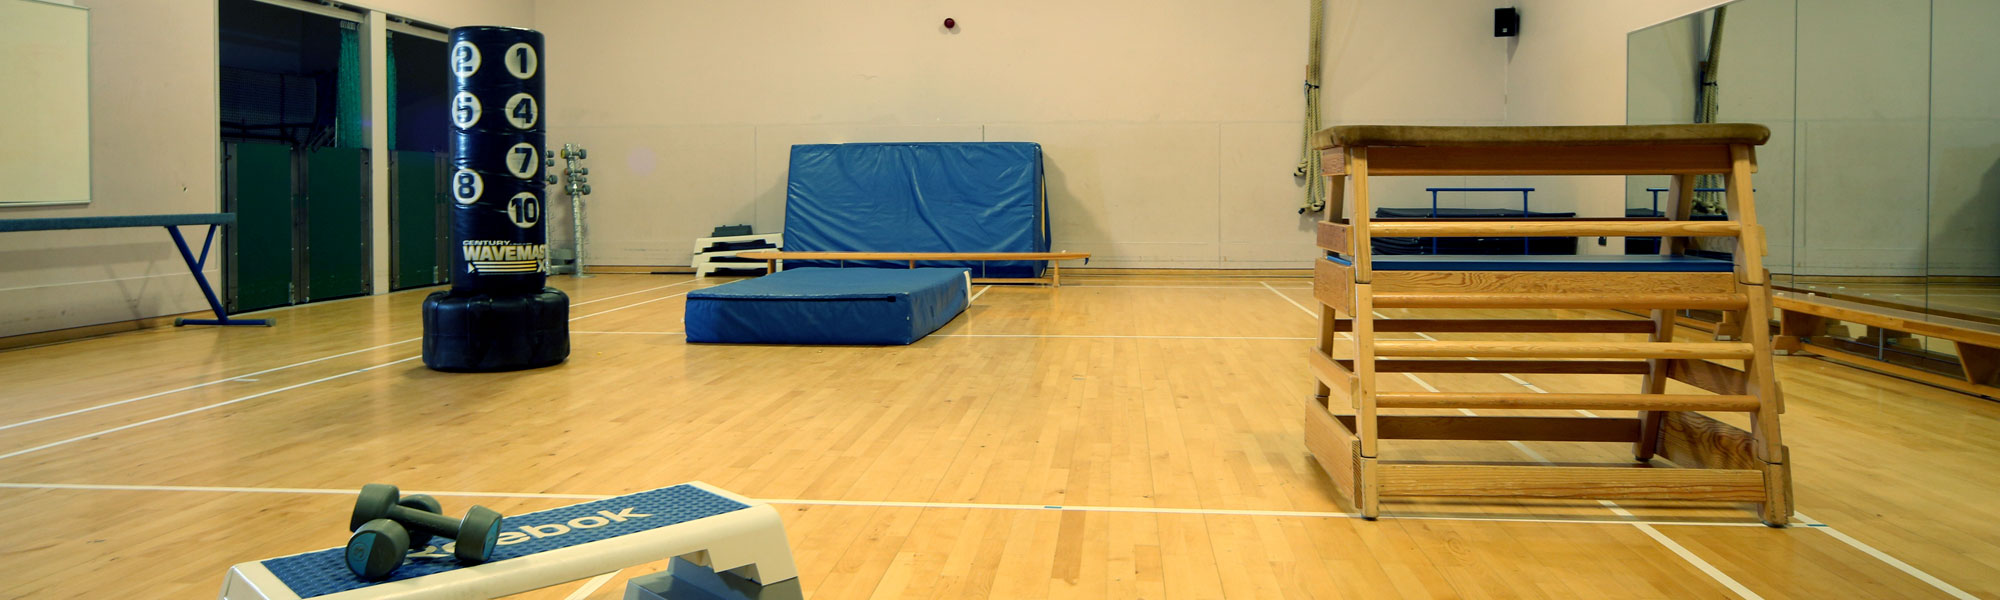 Gymnastics equipment at William Brookes School